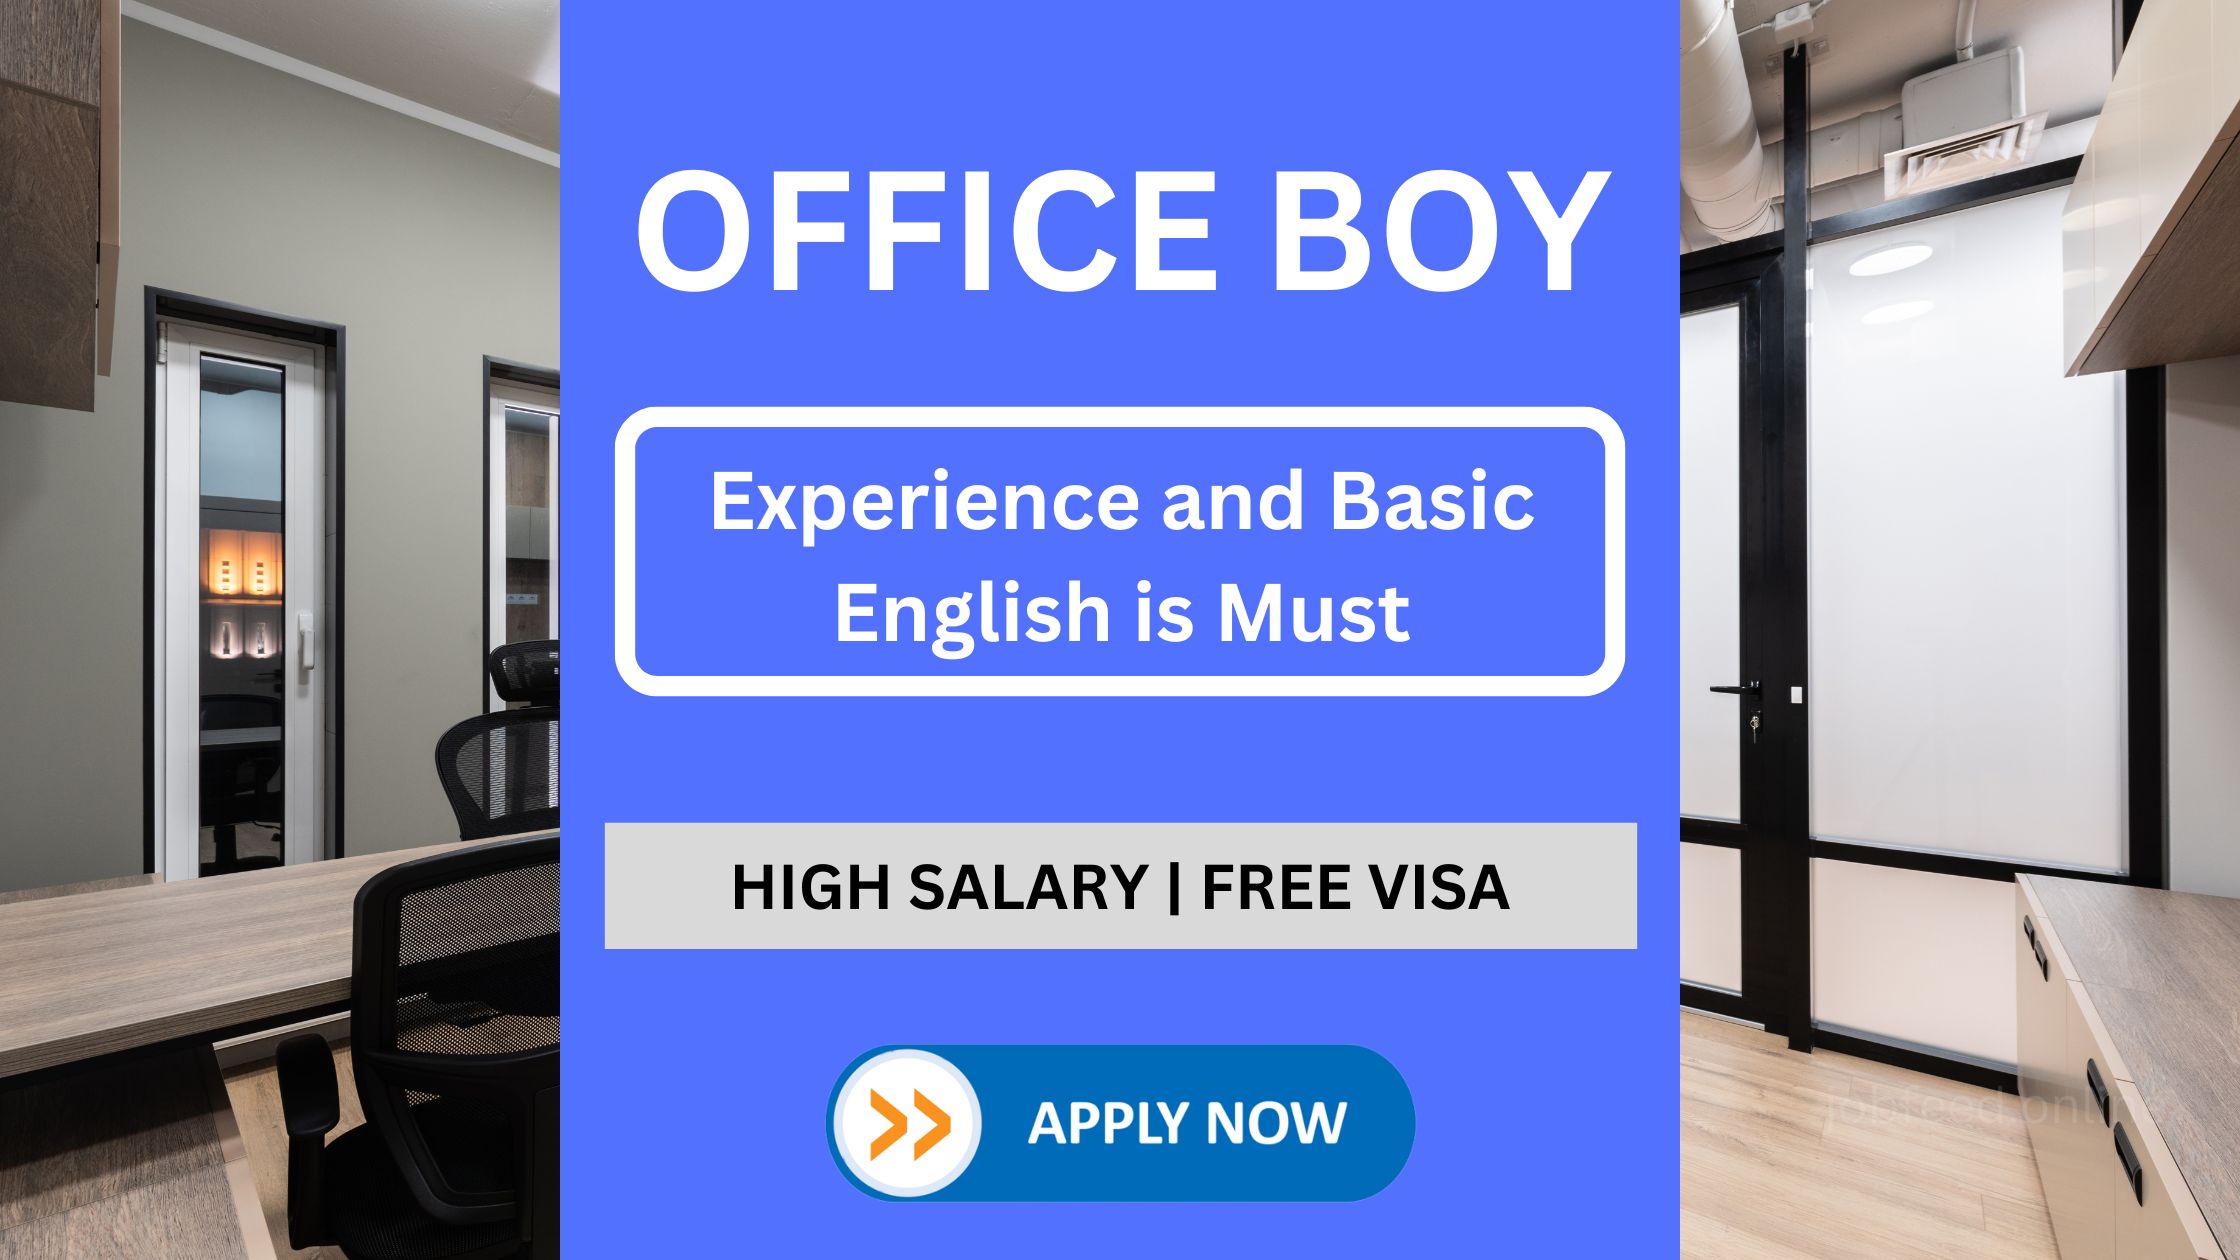 Office Boy Job Vacancy - Need Experience and Basic English